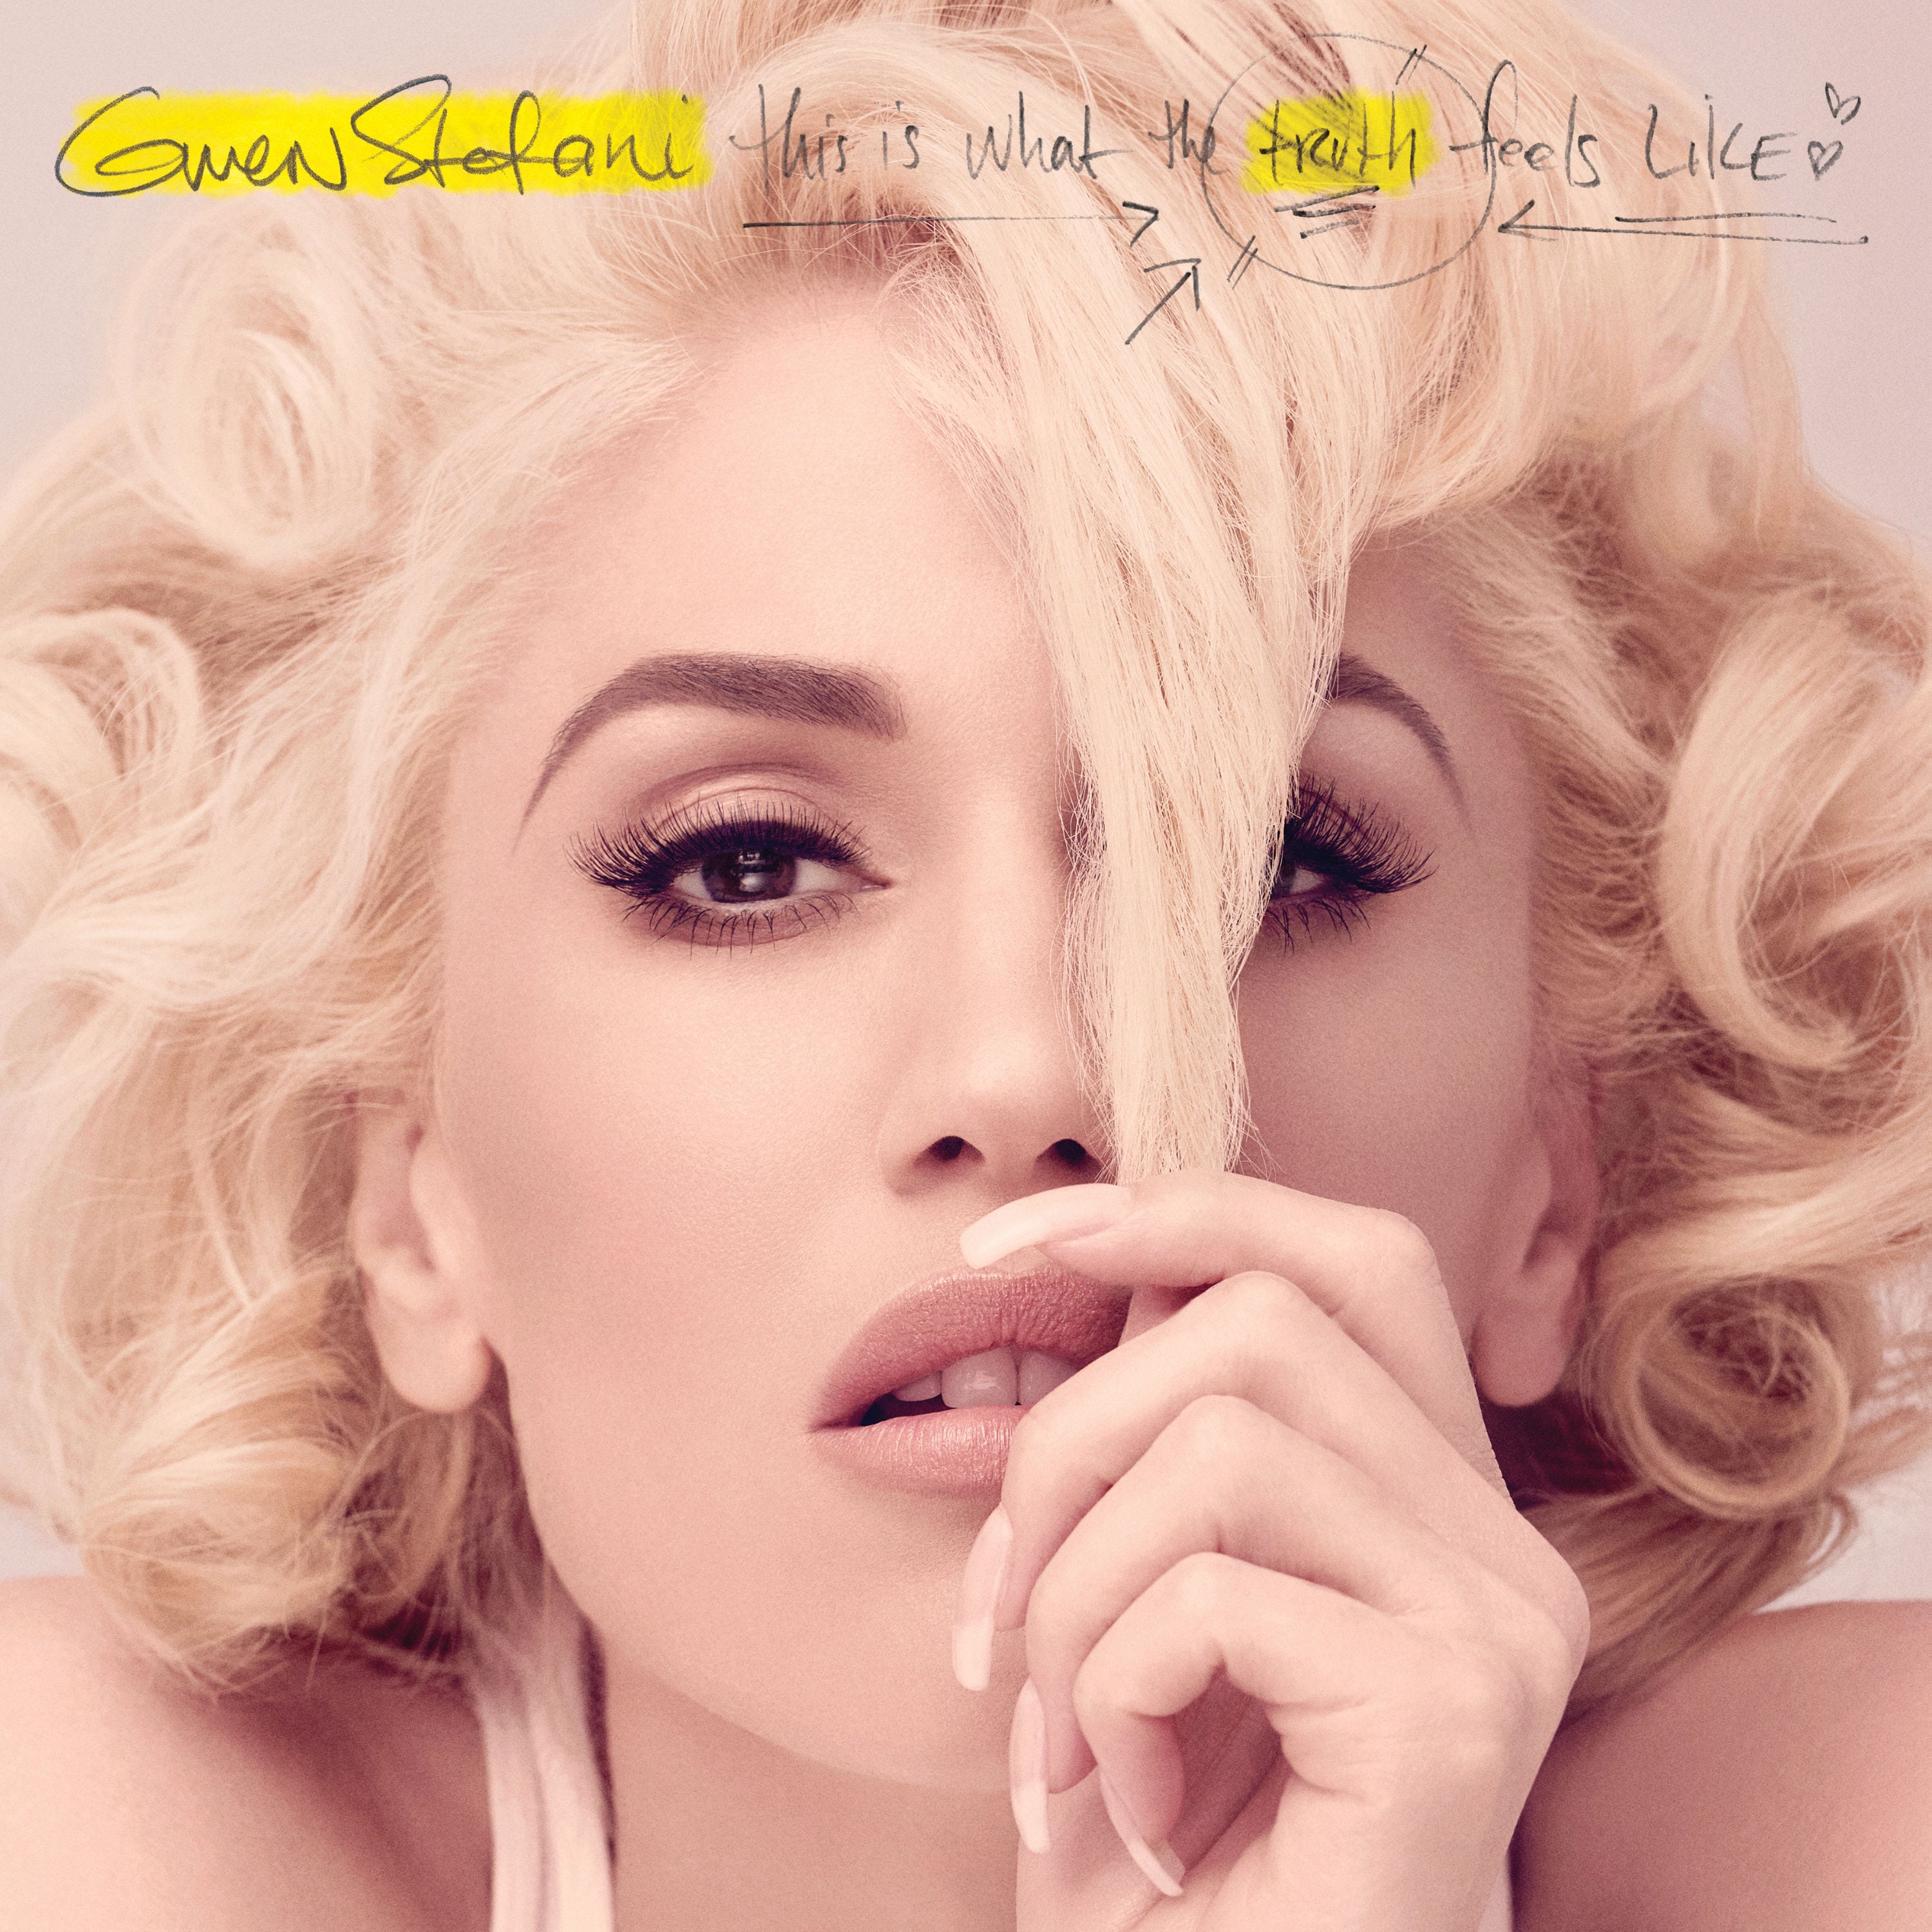 Gwen-Stefani-This-Is-What-It-Feels-Like-2016-Standard-mikrofwno.gr